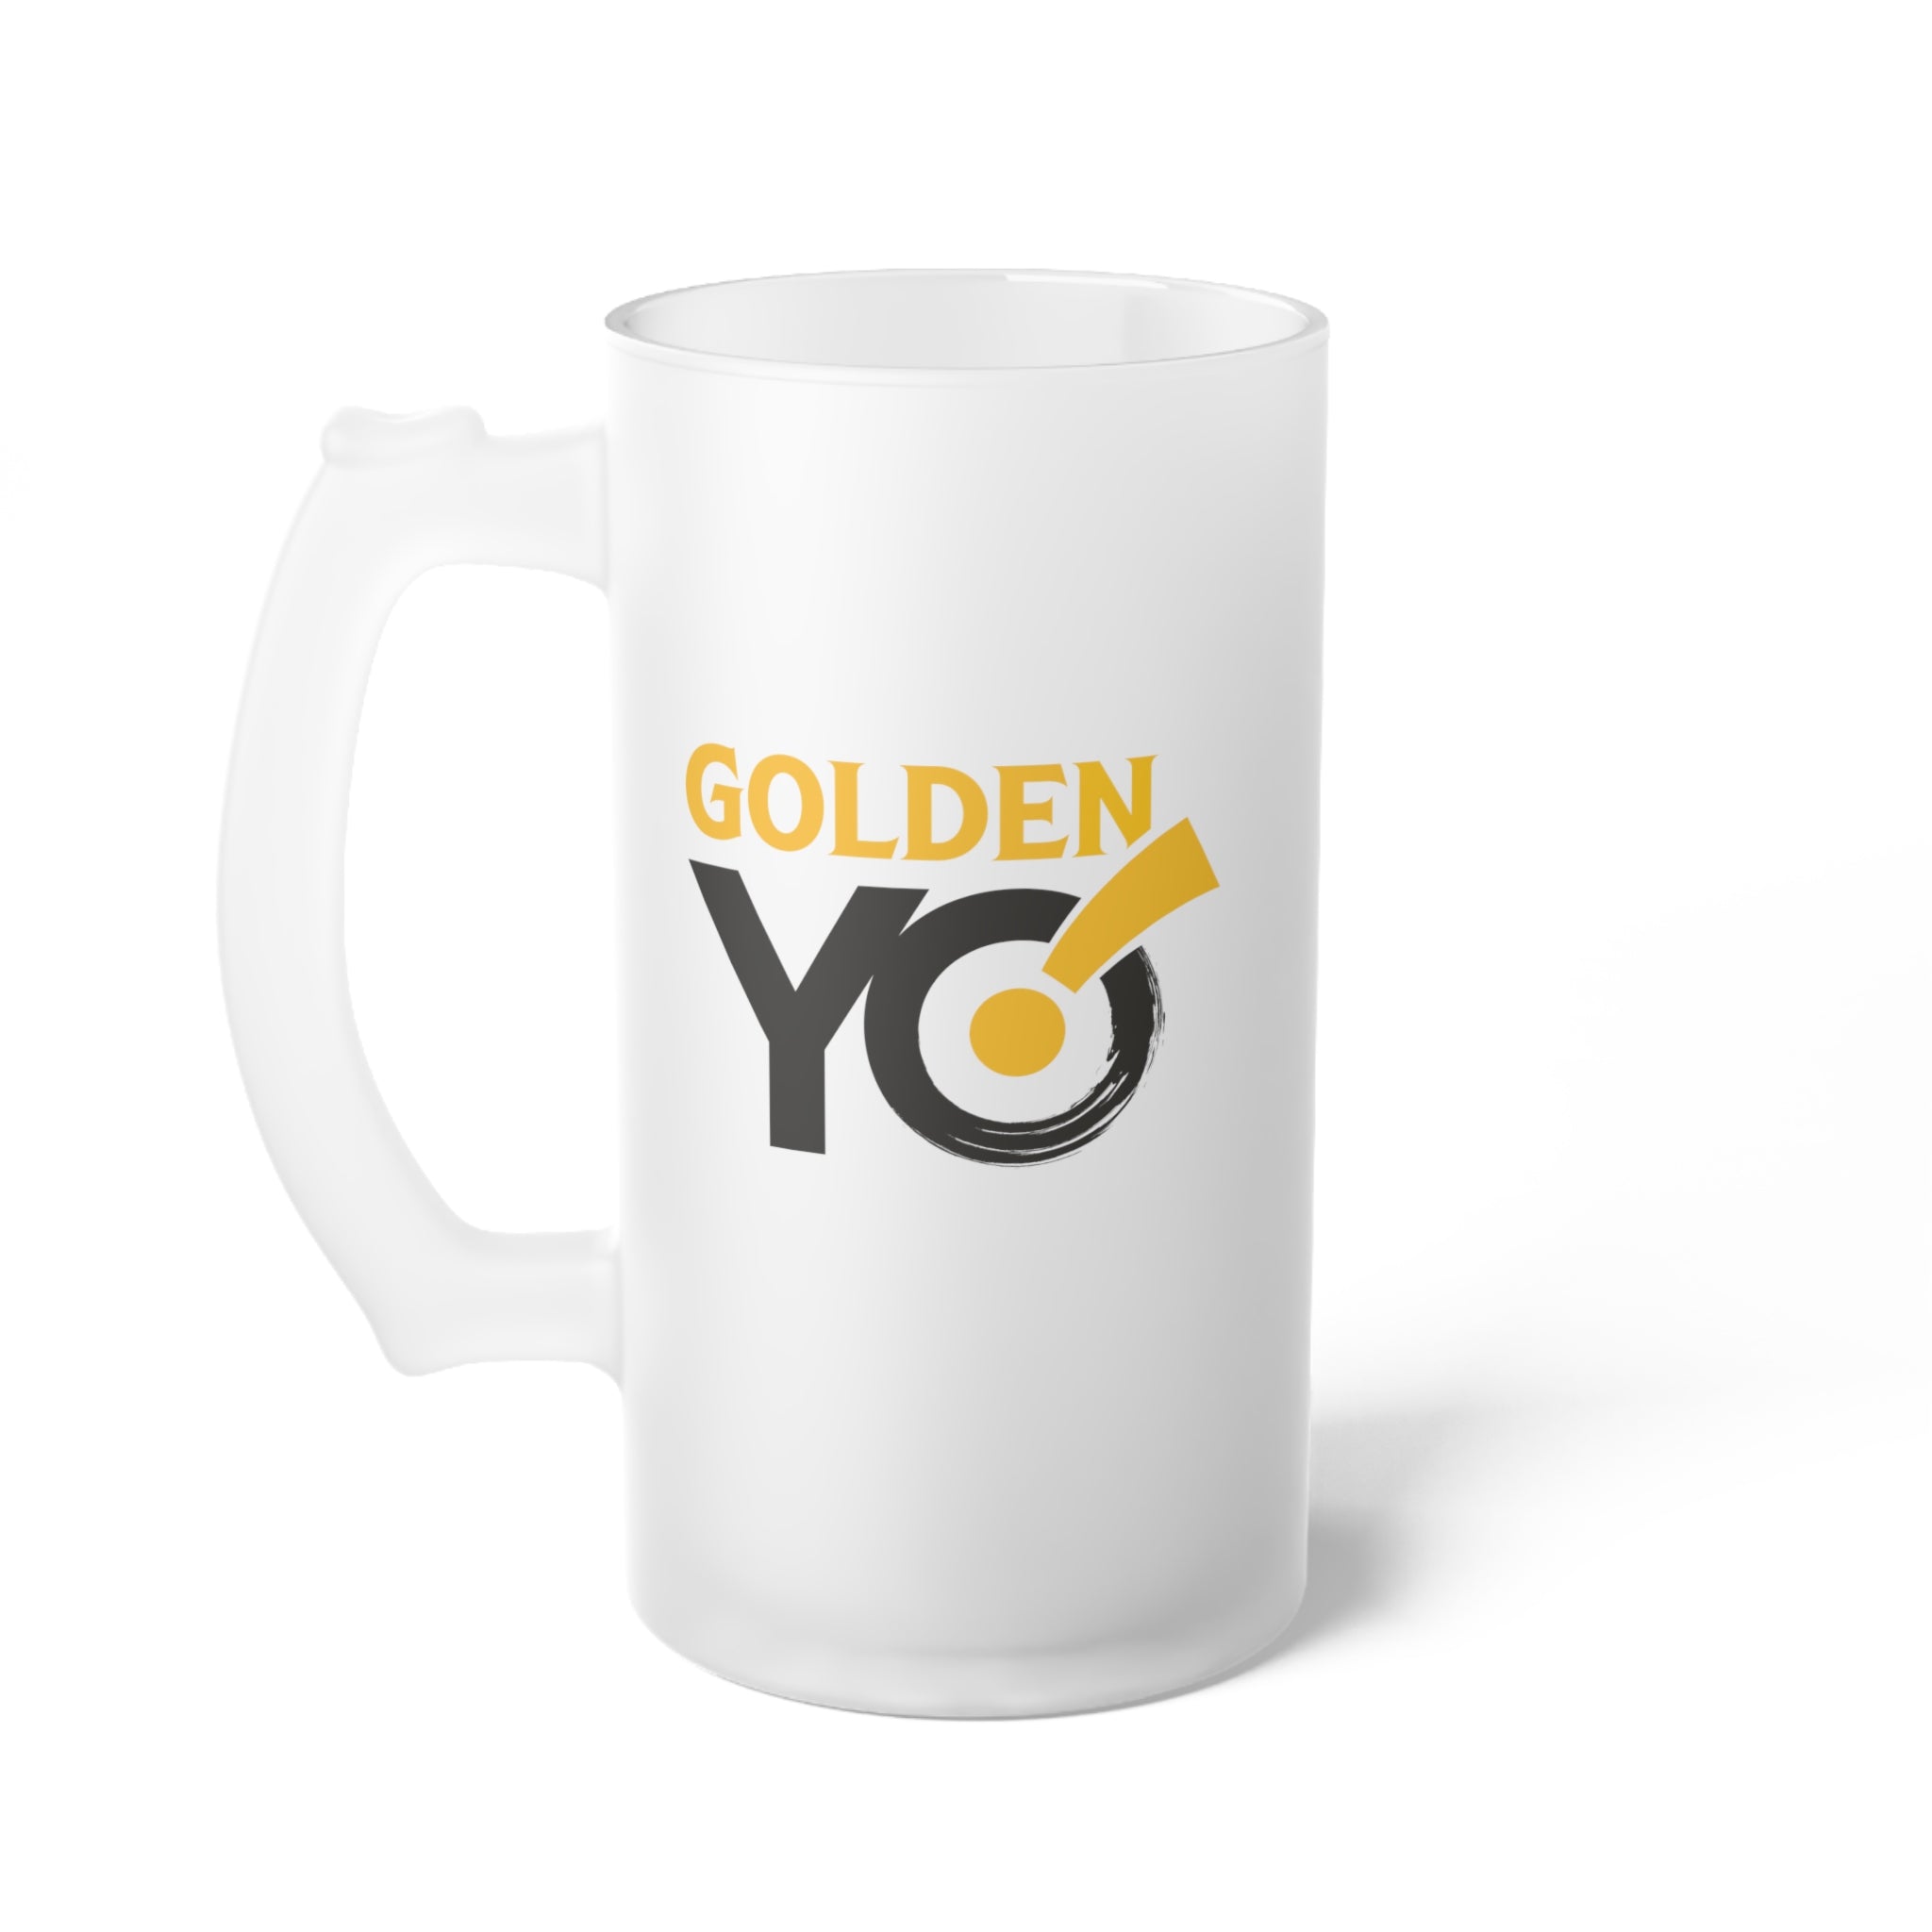 Golden YO! Frosted Glass Beer Mug